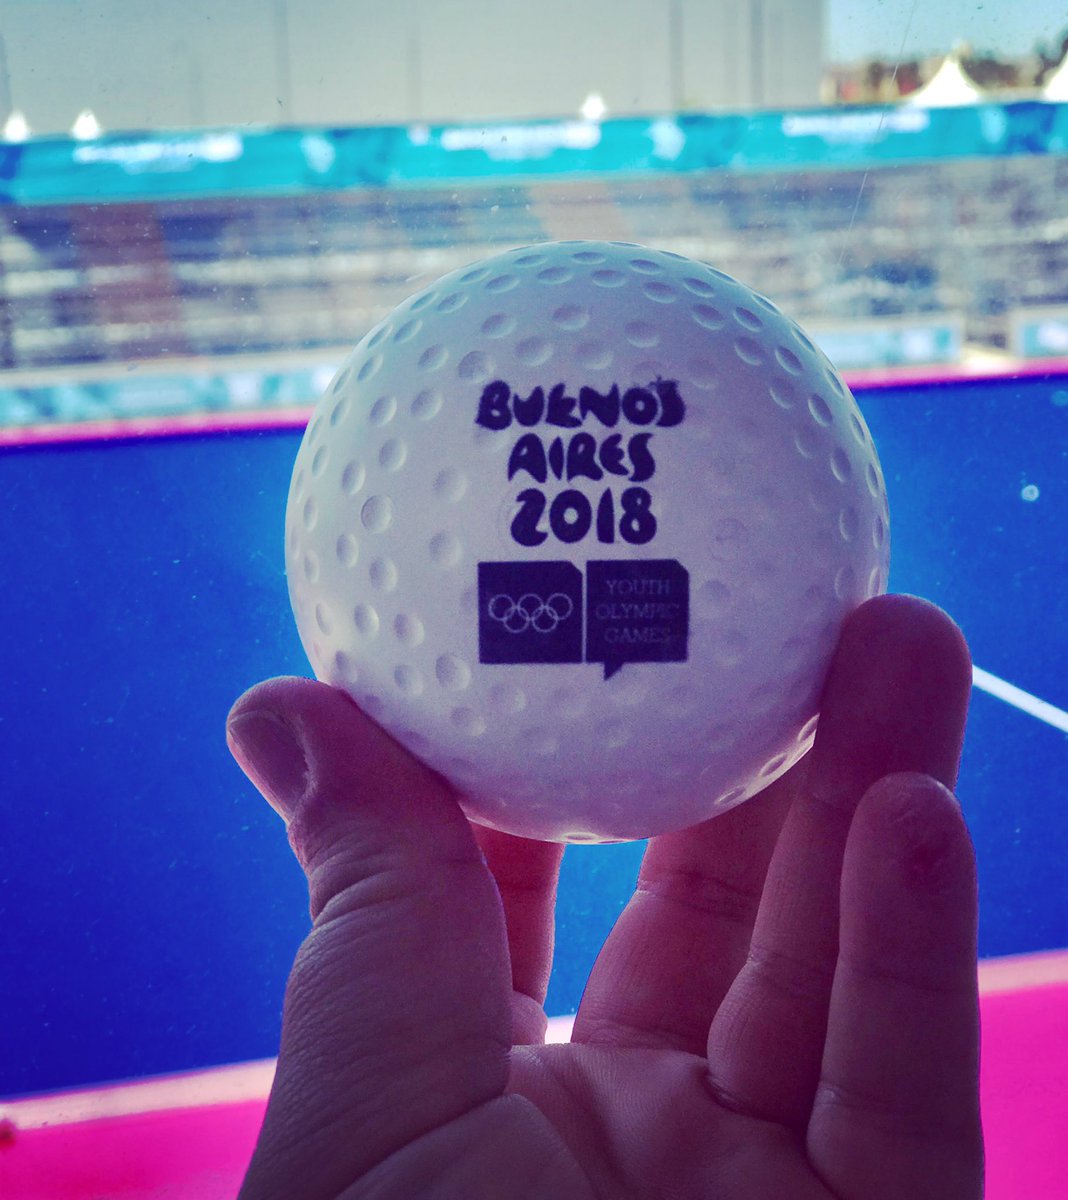 YOG #CountDown 
👋🏻 MEET THE BALL 👋🏻 #OlympicBall #YOG2018 #BuenosAires2018 #PahfTeams #YouthOlympicGames @fihockey